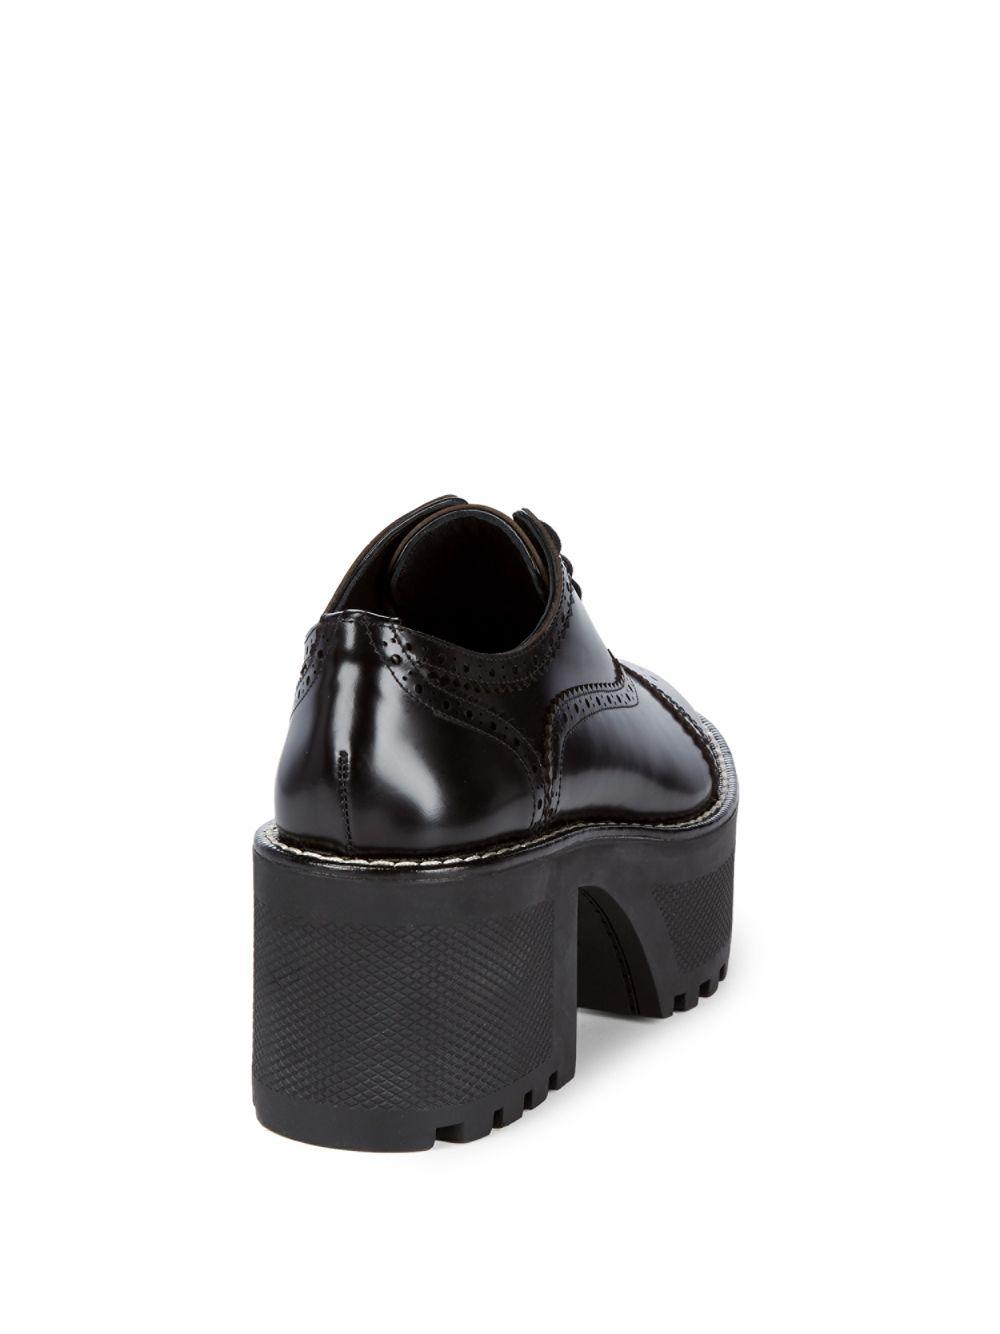 Alice + Olivia Platform Oxford Shoes in Black | Lyst